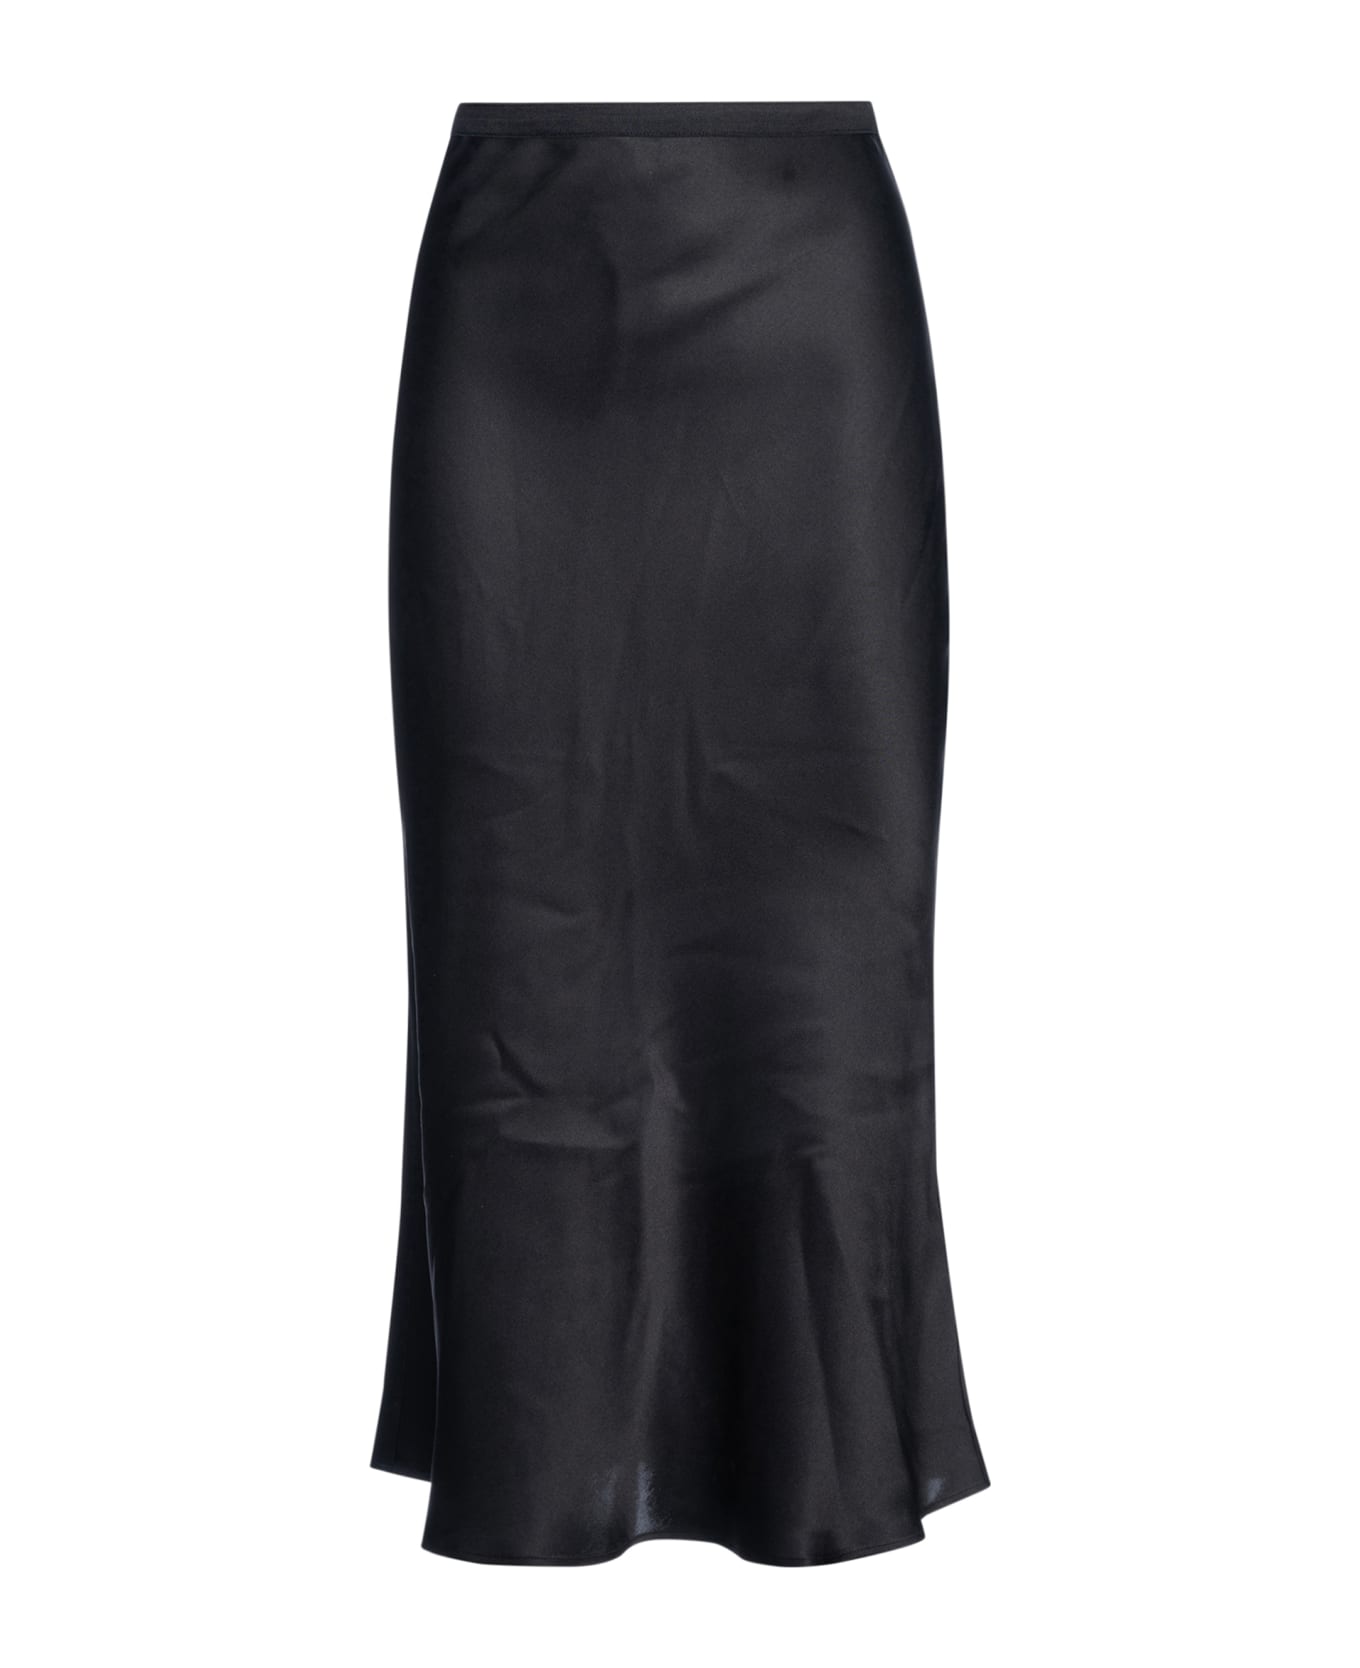 Anine Bing Bar Skirt - Black スカート